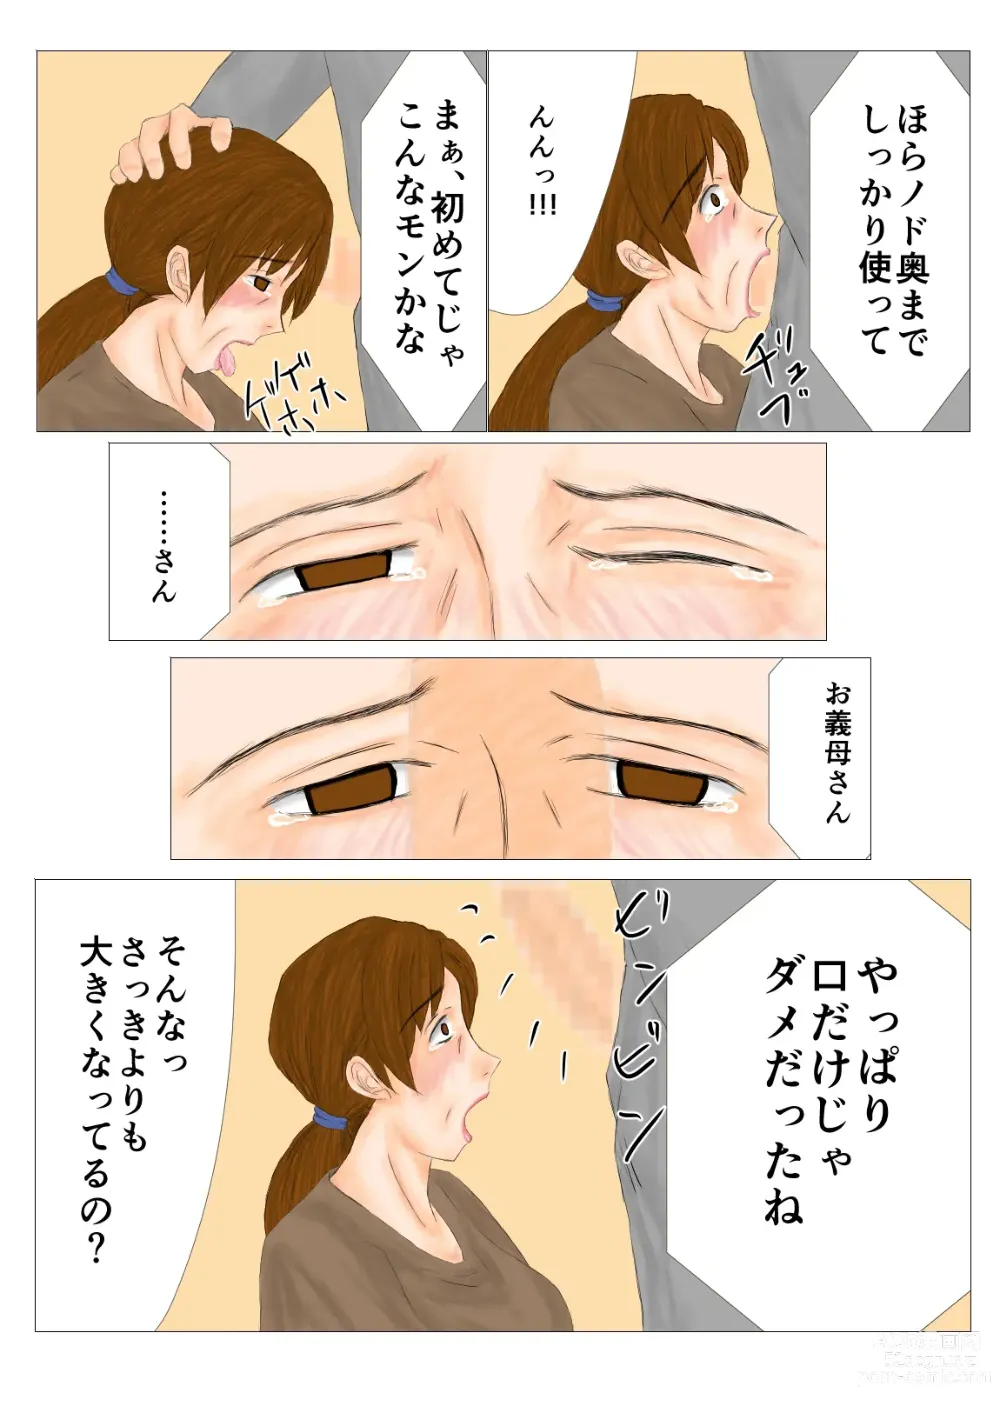 Page 8 of doujinshi Tsumahahakan